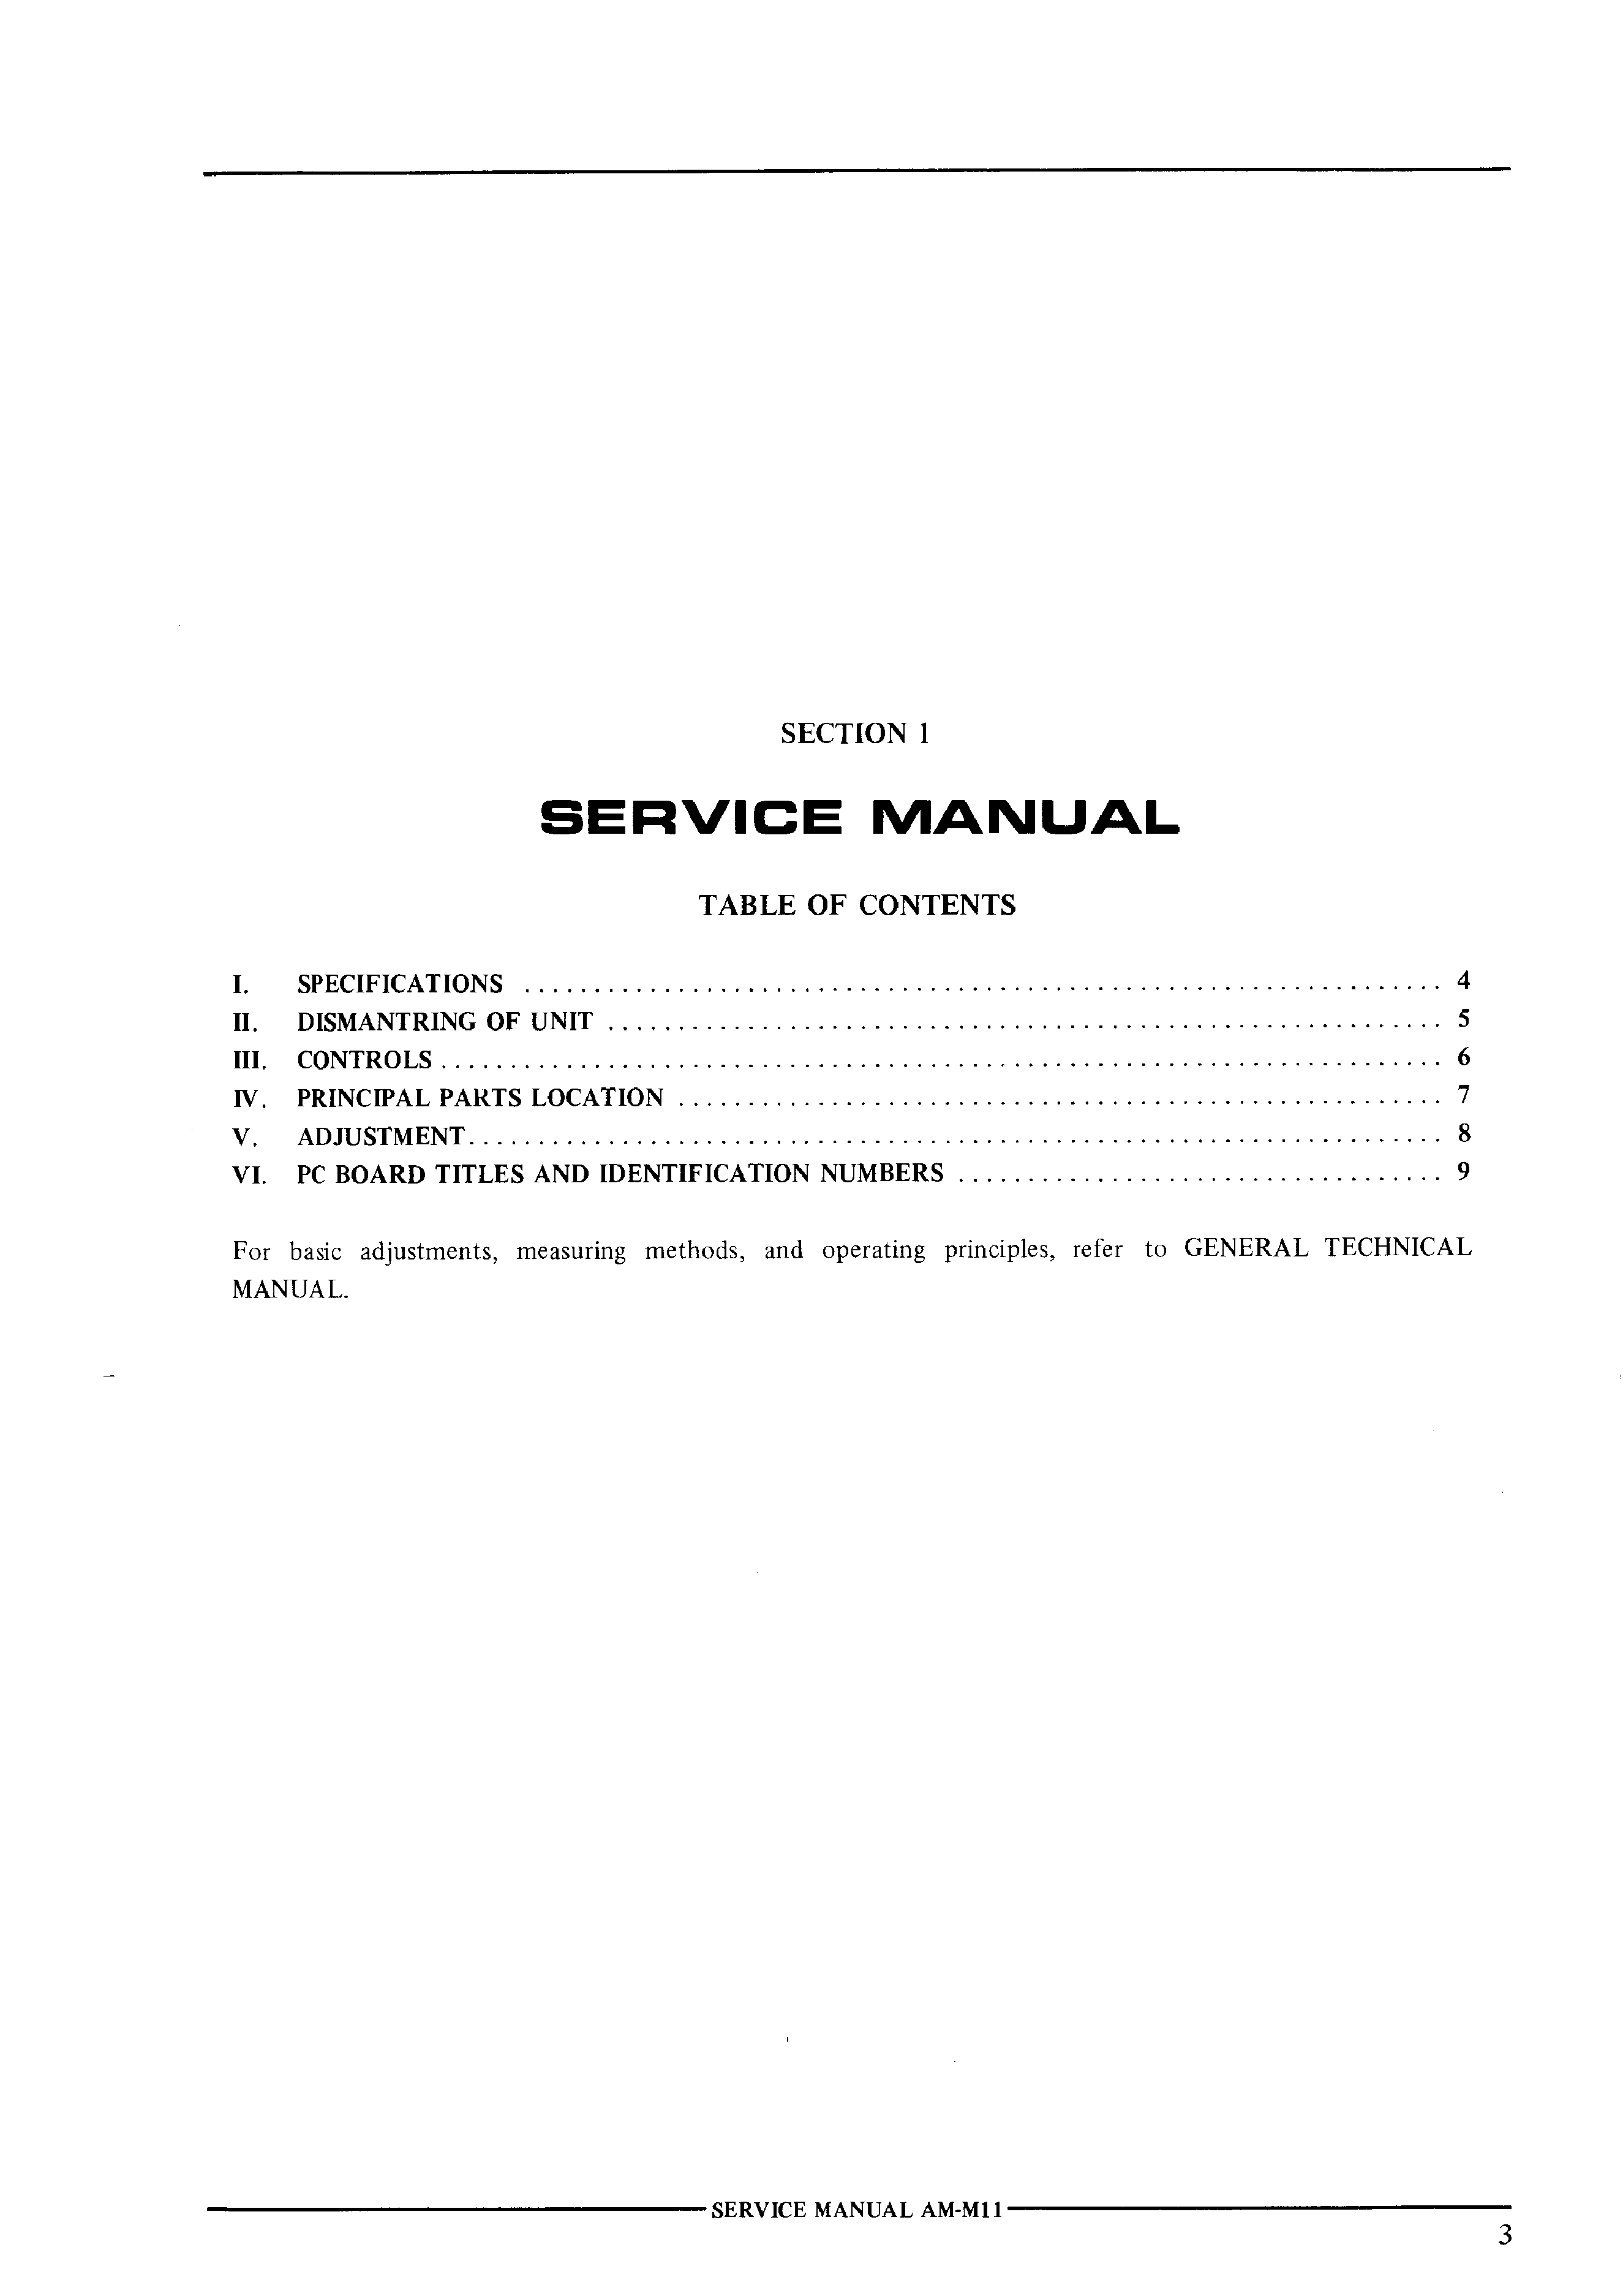 ORIGINALI service manual AKAI ap-m11 